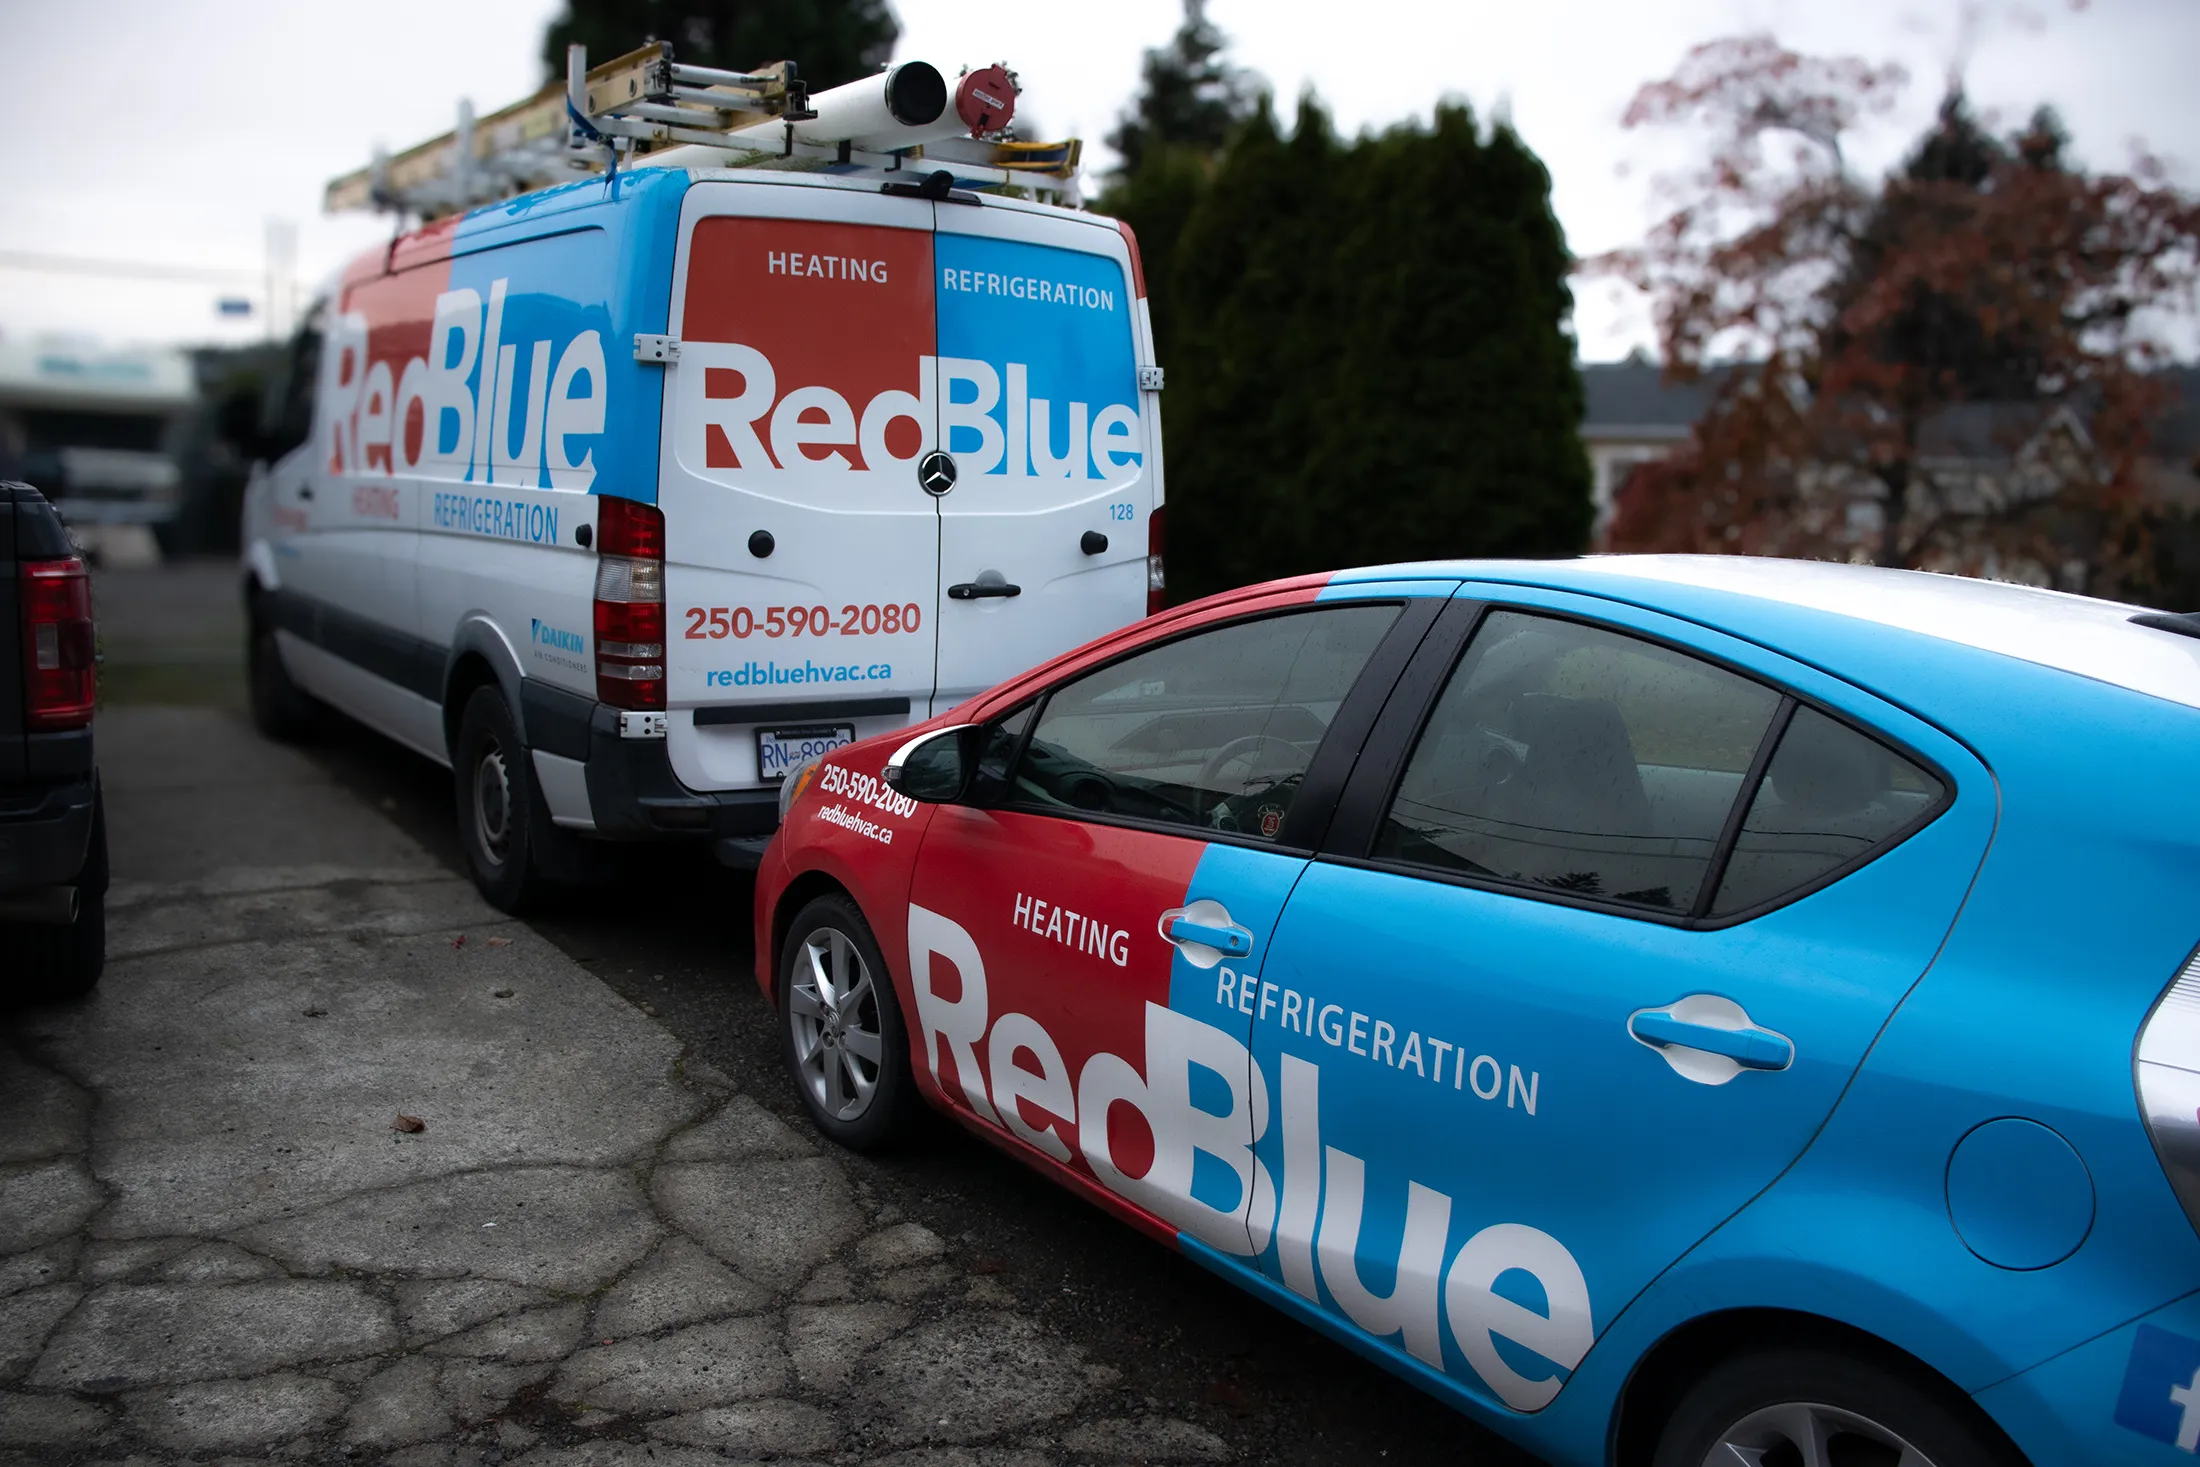 RedBlue Heating & Refrigeration vehicles in Victoria BC